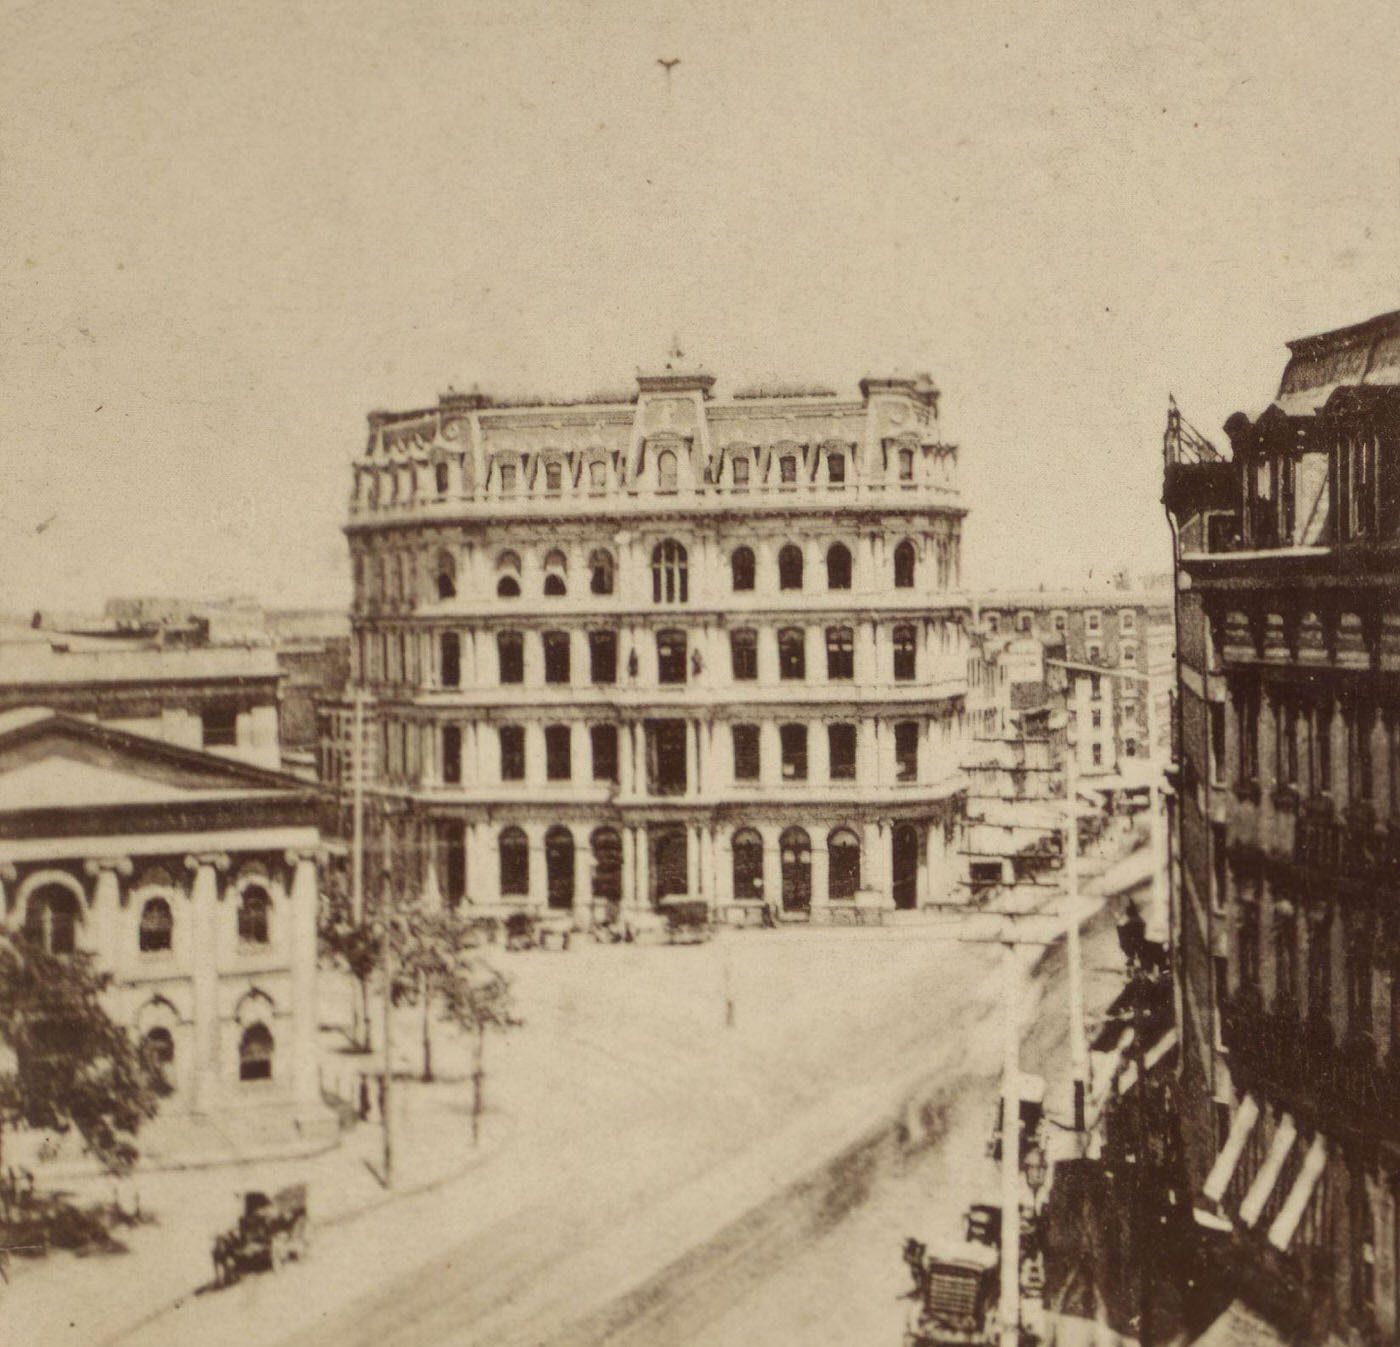 Staats Zeitung Building, Manhattan, New York City, 1880